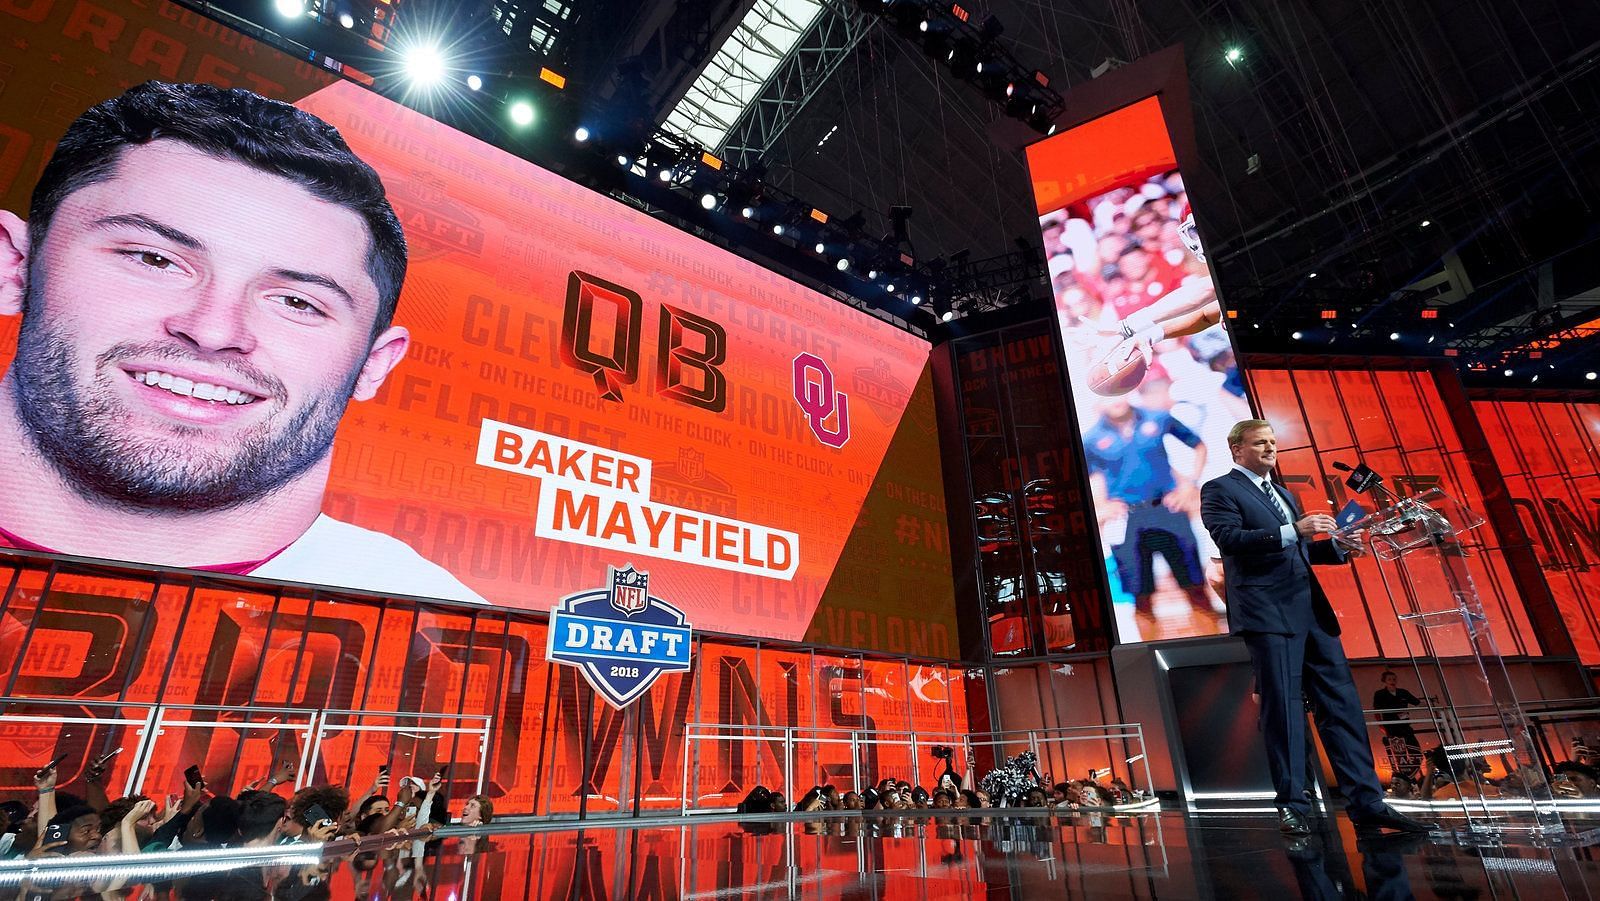 2018 NFL Draft ft. Baker Mayfield and Roger Goodell